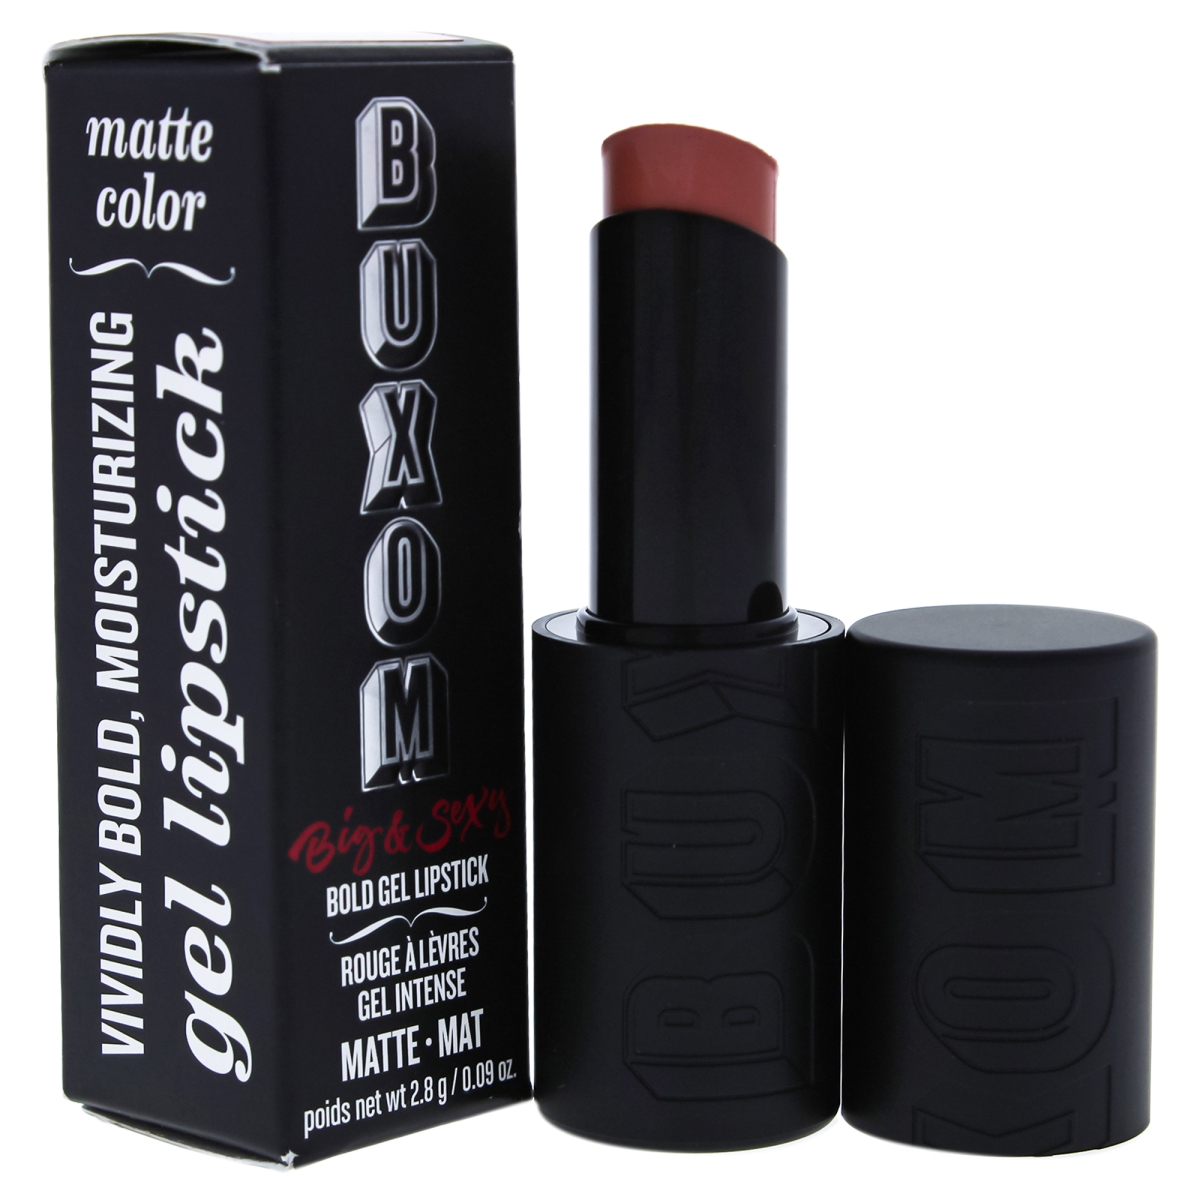 I0086693 0.09 Oz Big & Sexy Bold Gel Lipstick For Womens - White Russian